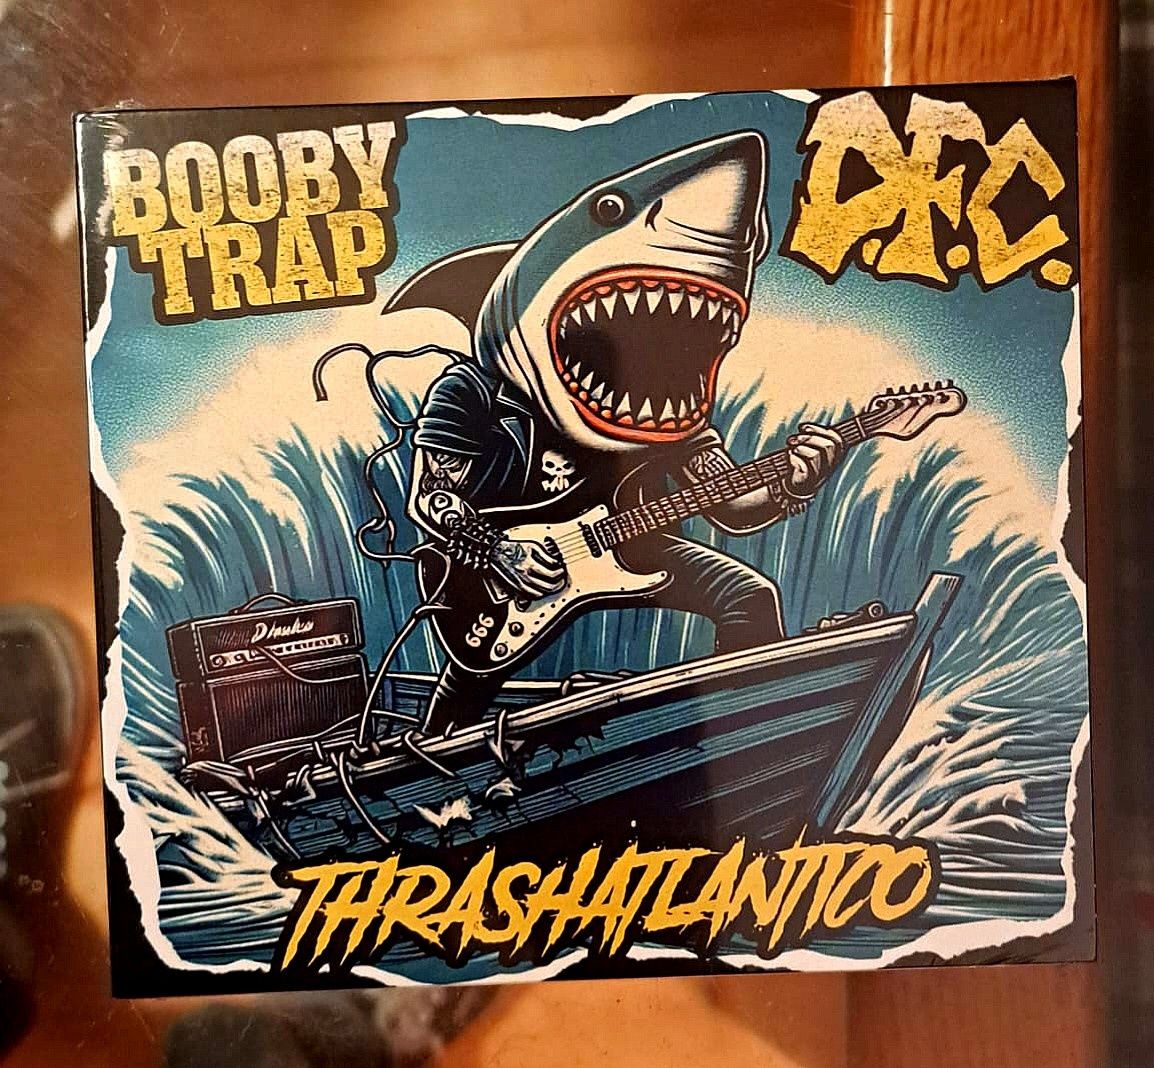 CD split: Booby Trap x DFC  - portes grátis